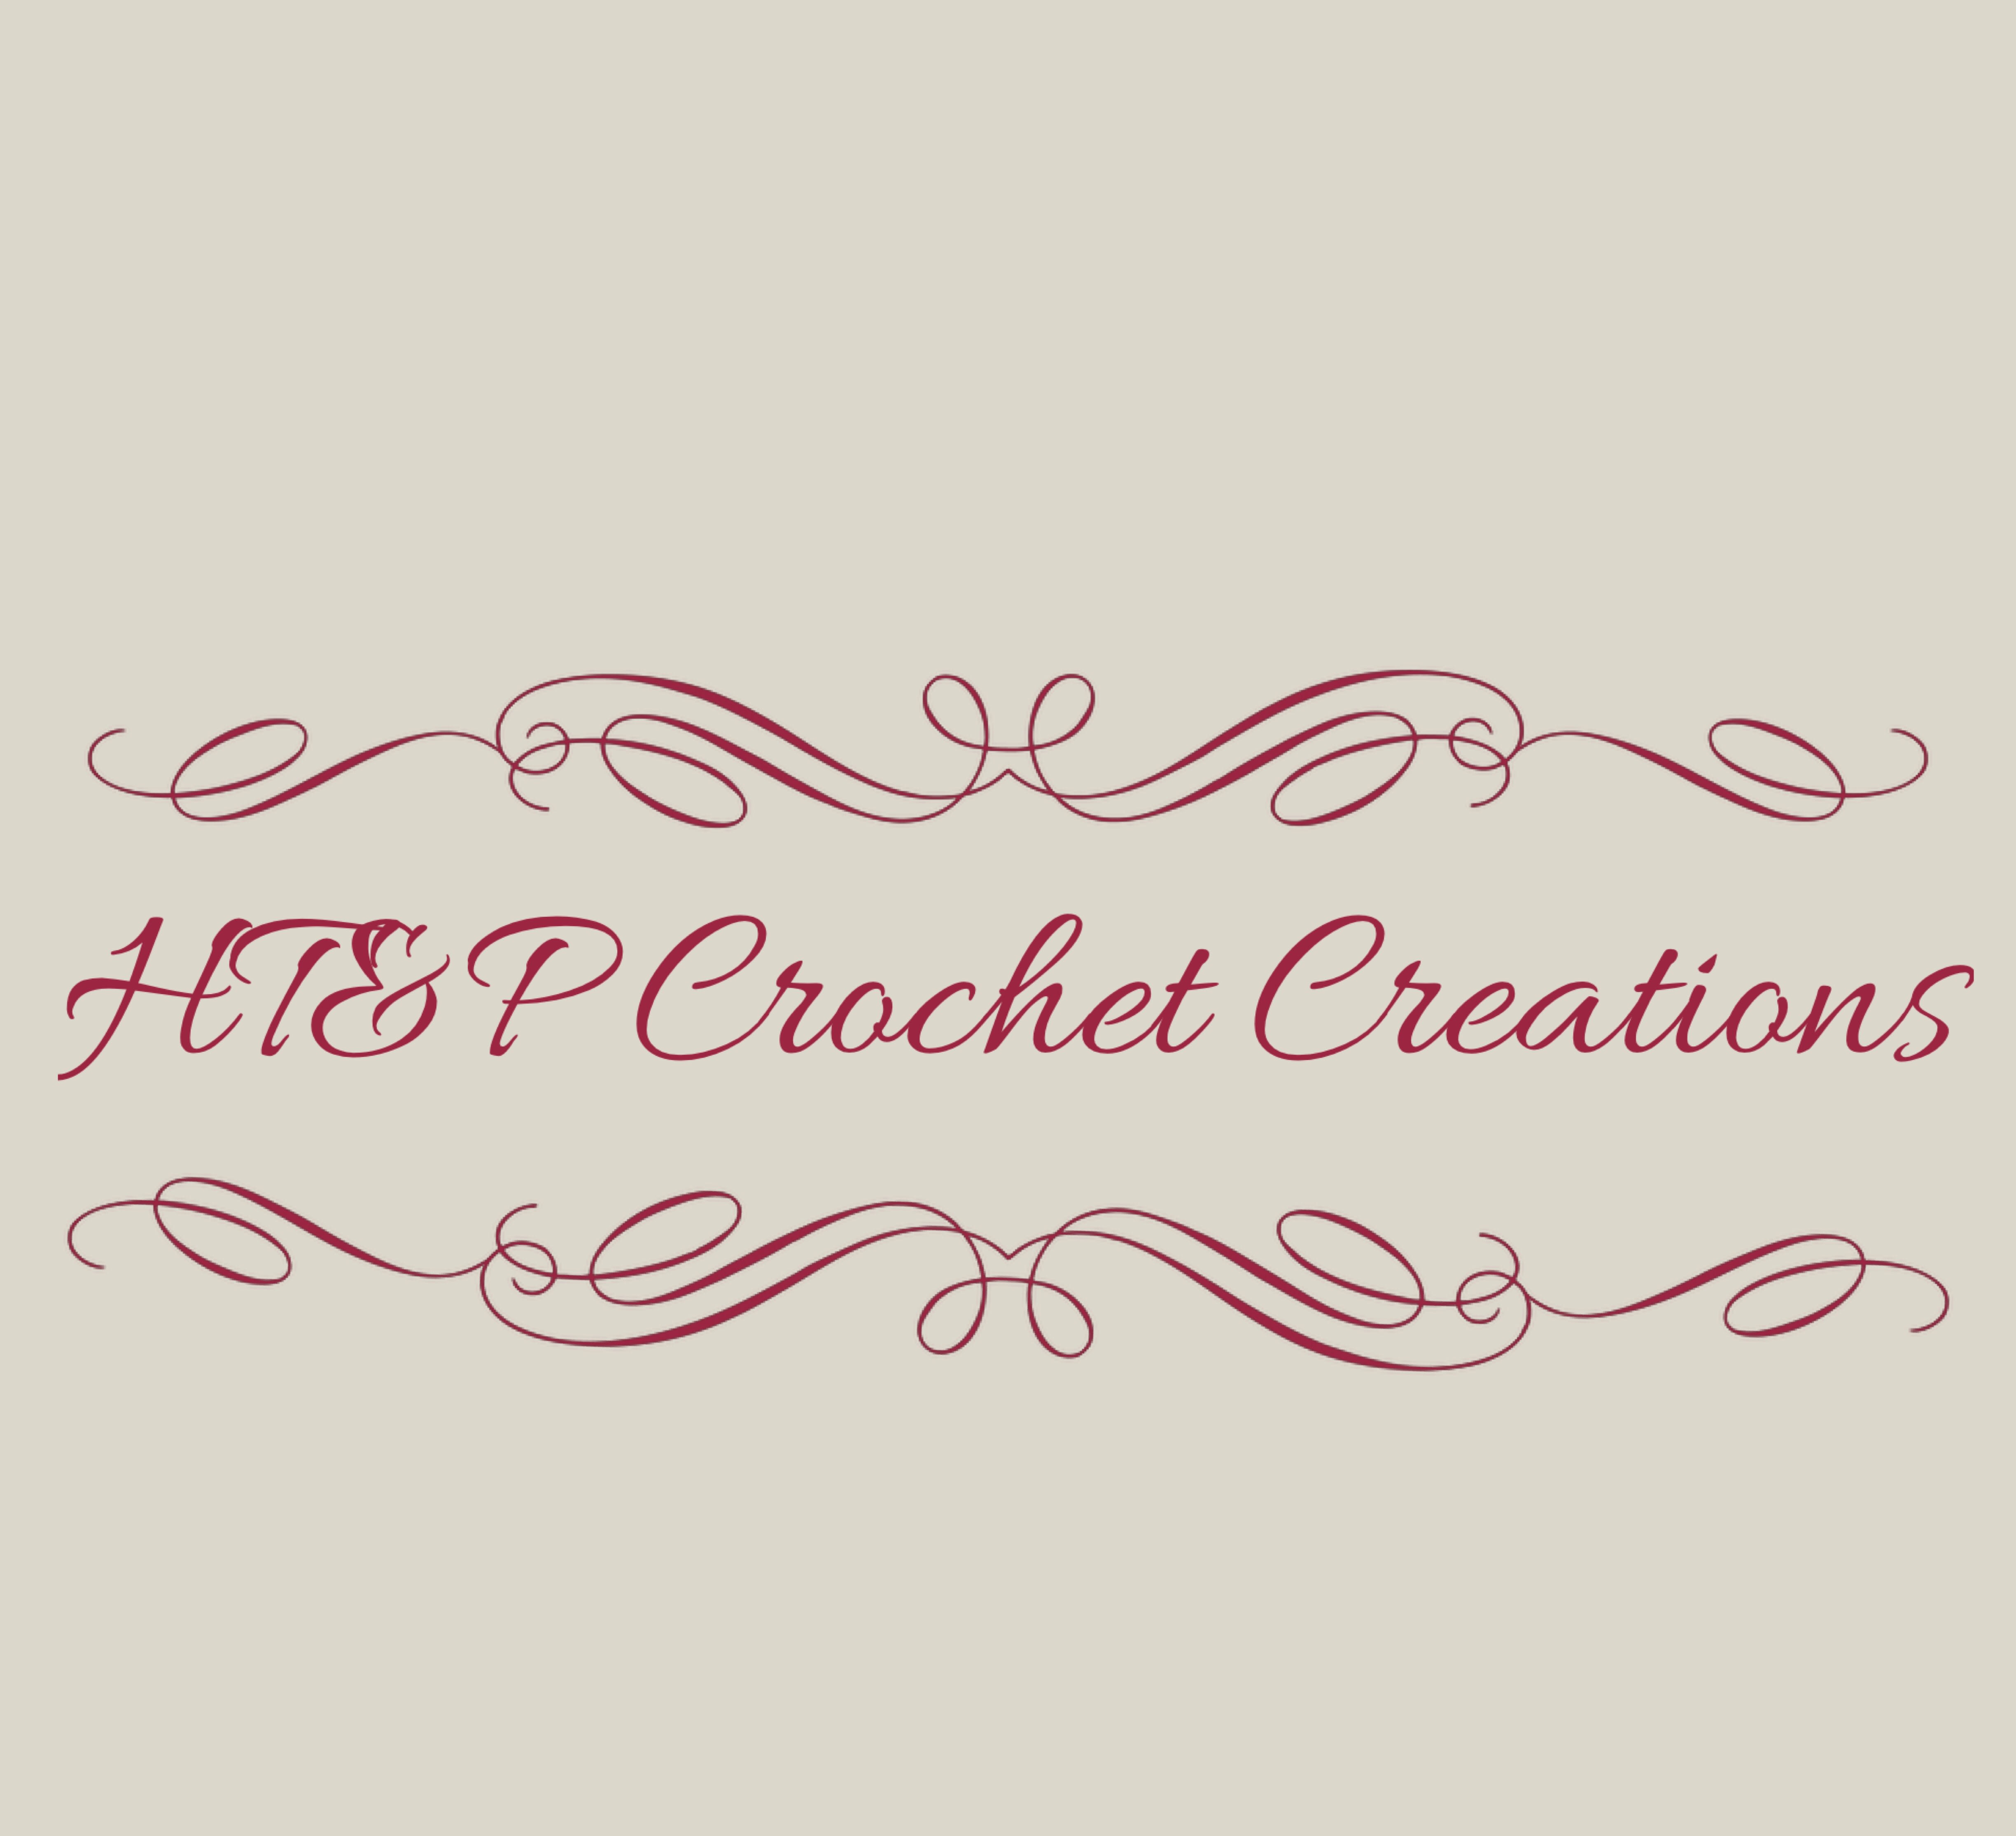 Ht&P Crochet Creations